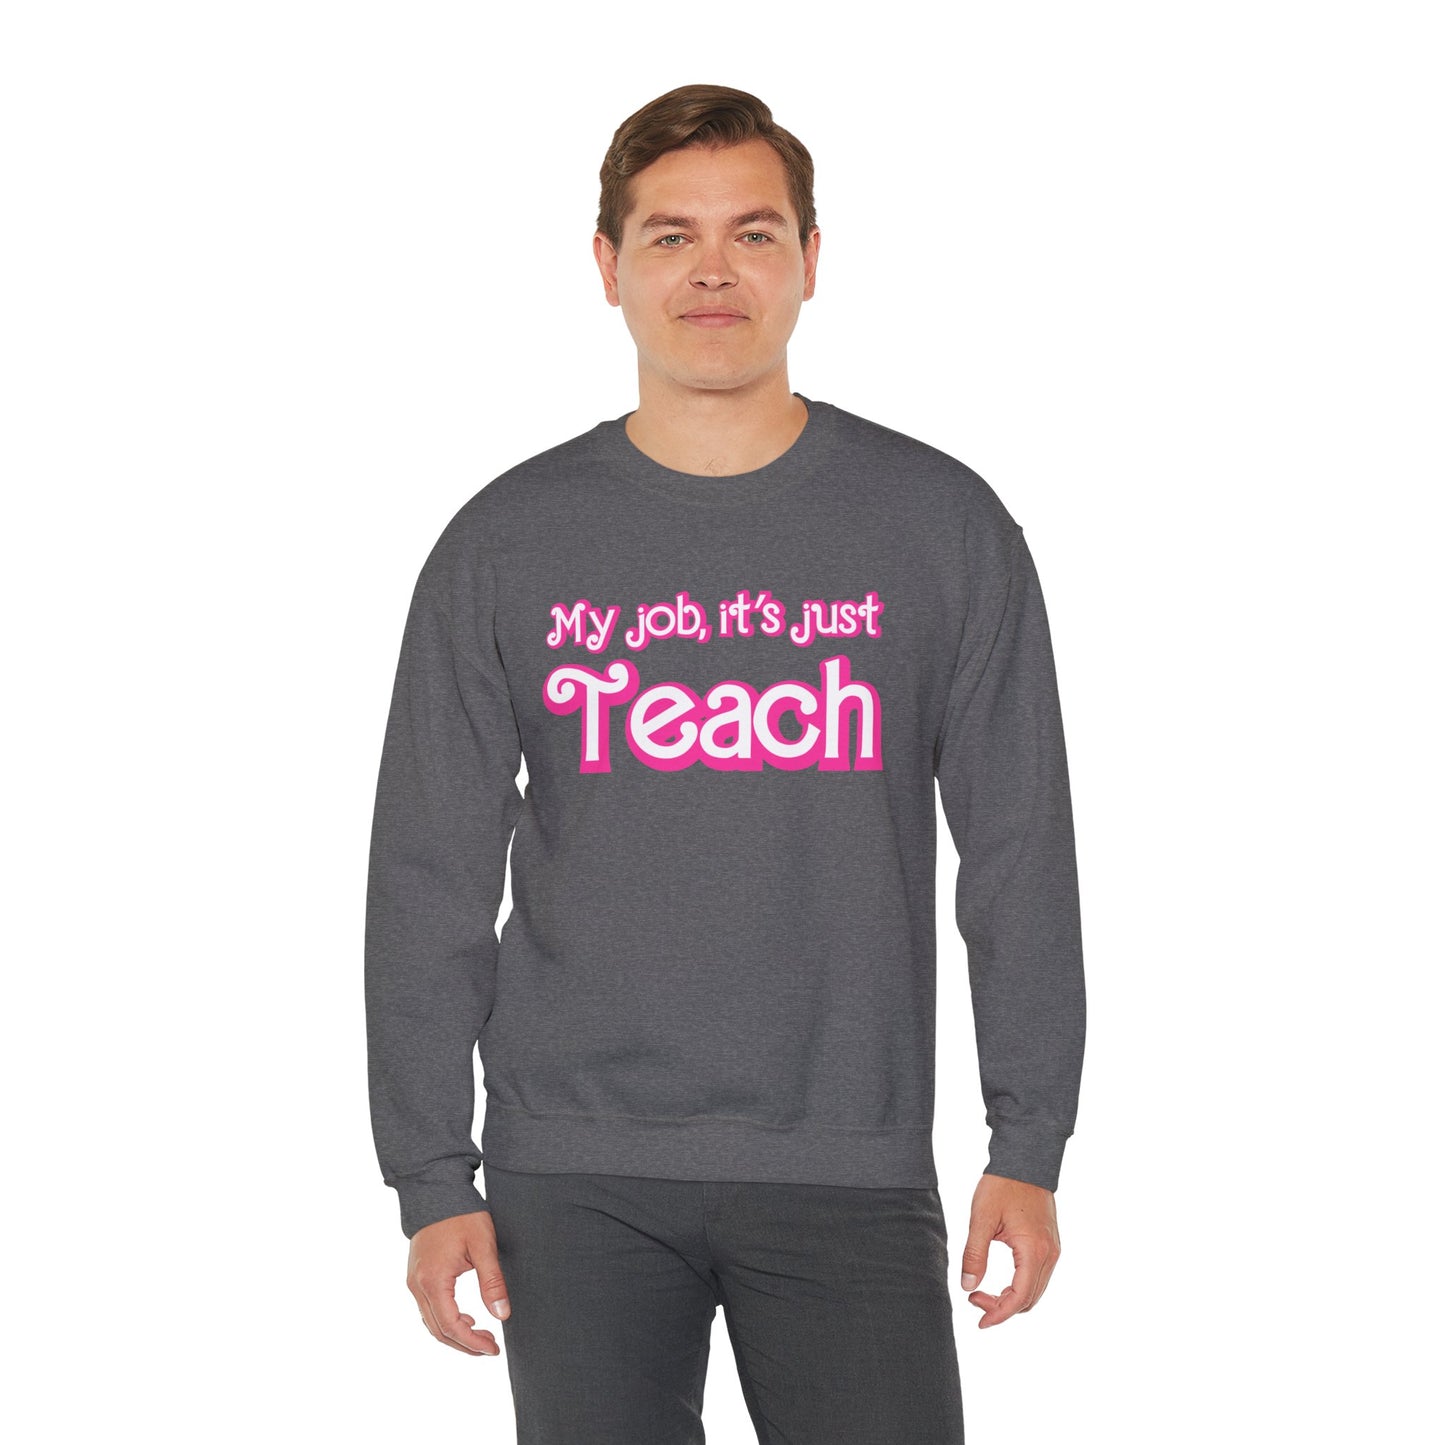 My Job is Teach Sweatshirt, Trendy Teacher Sweatshirt, Retro Back to school, Teacher Appreciation, Checkered Teacher Sweatshirt, S735